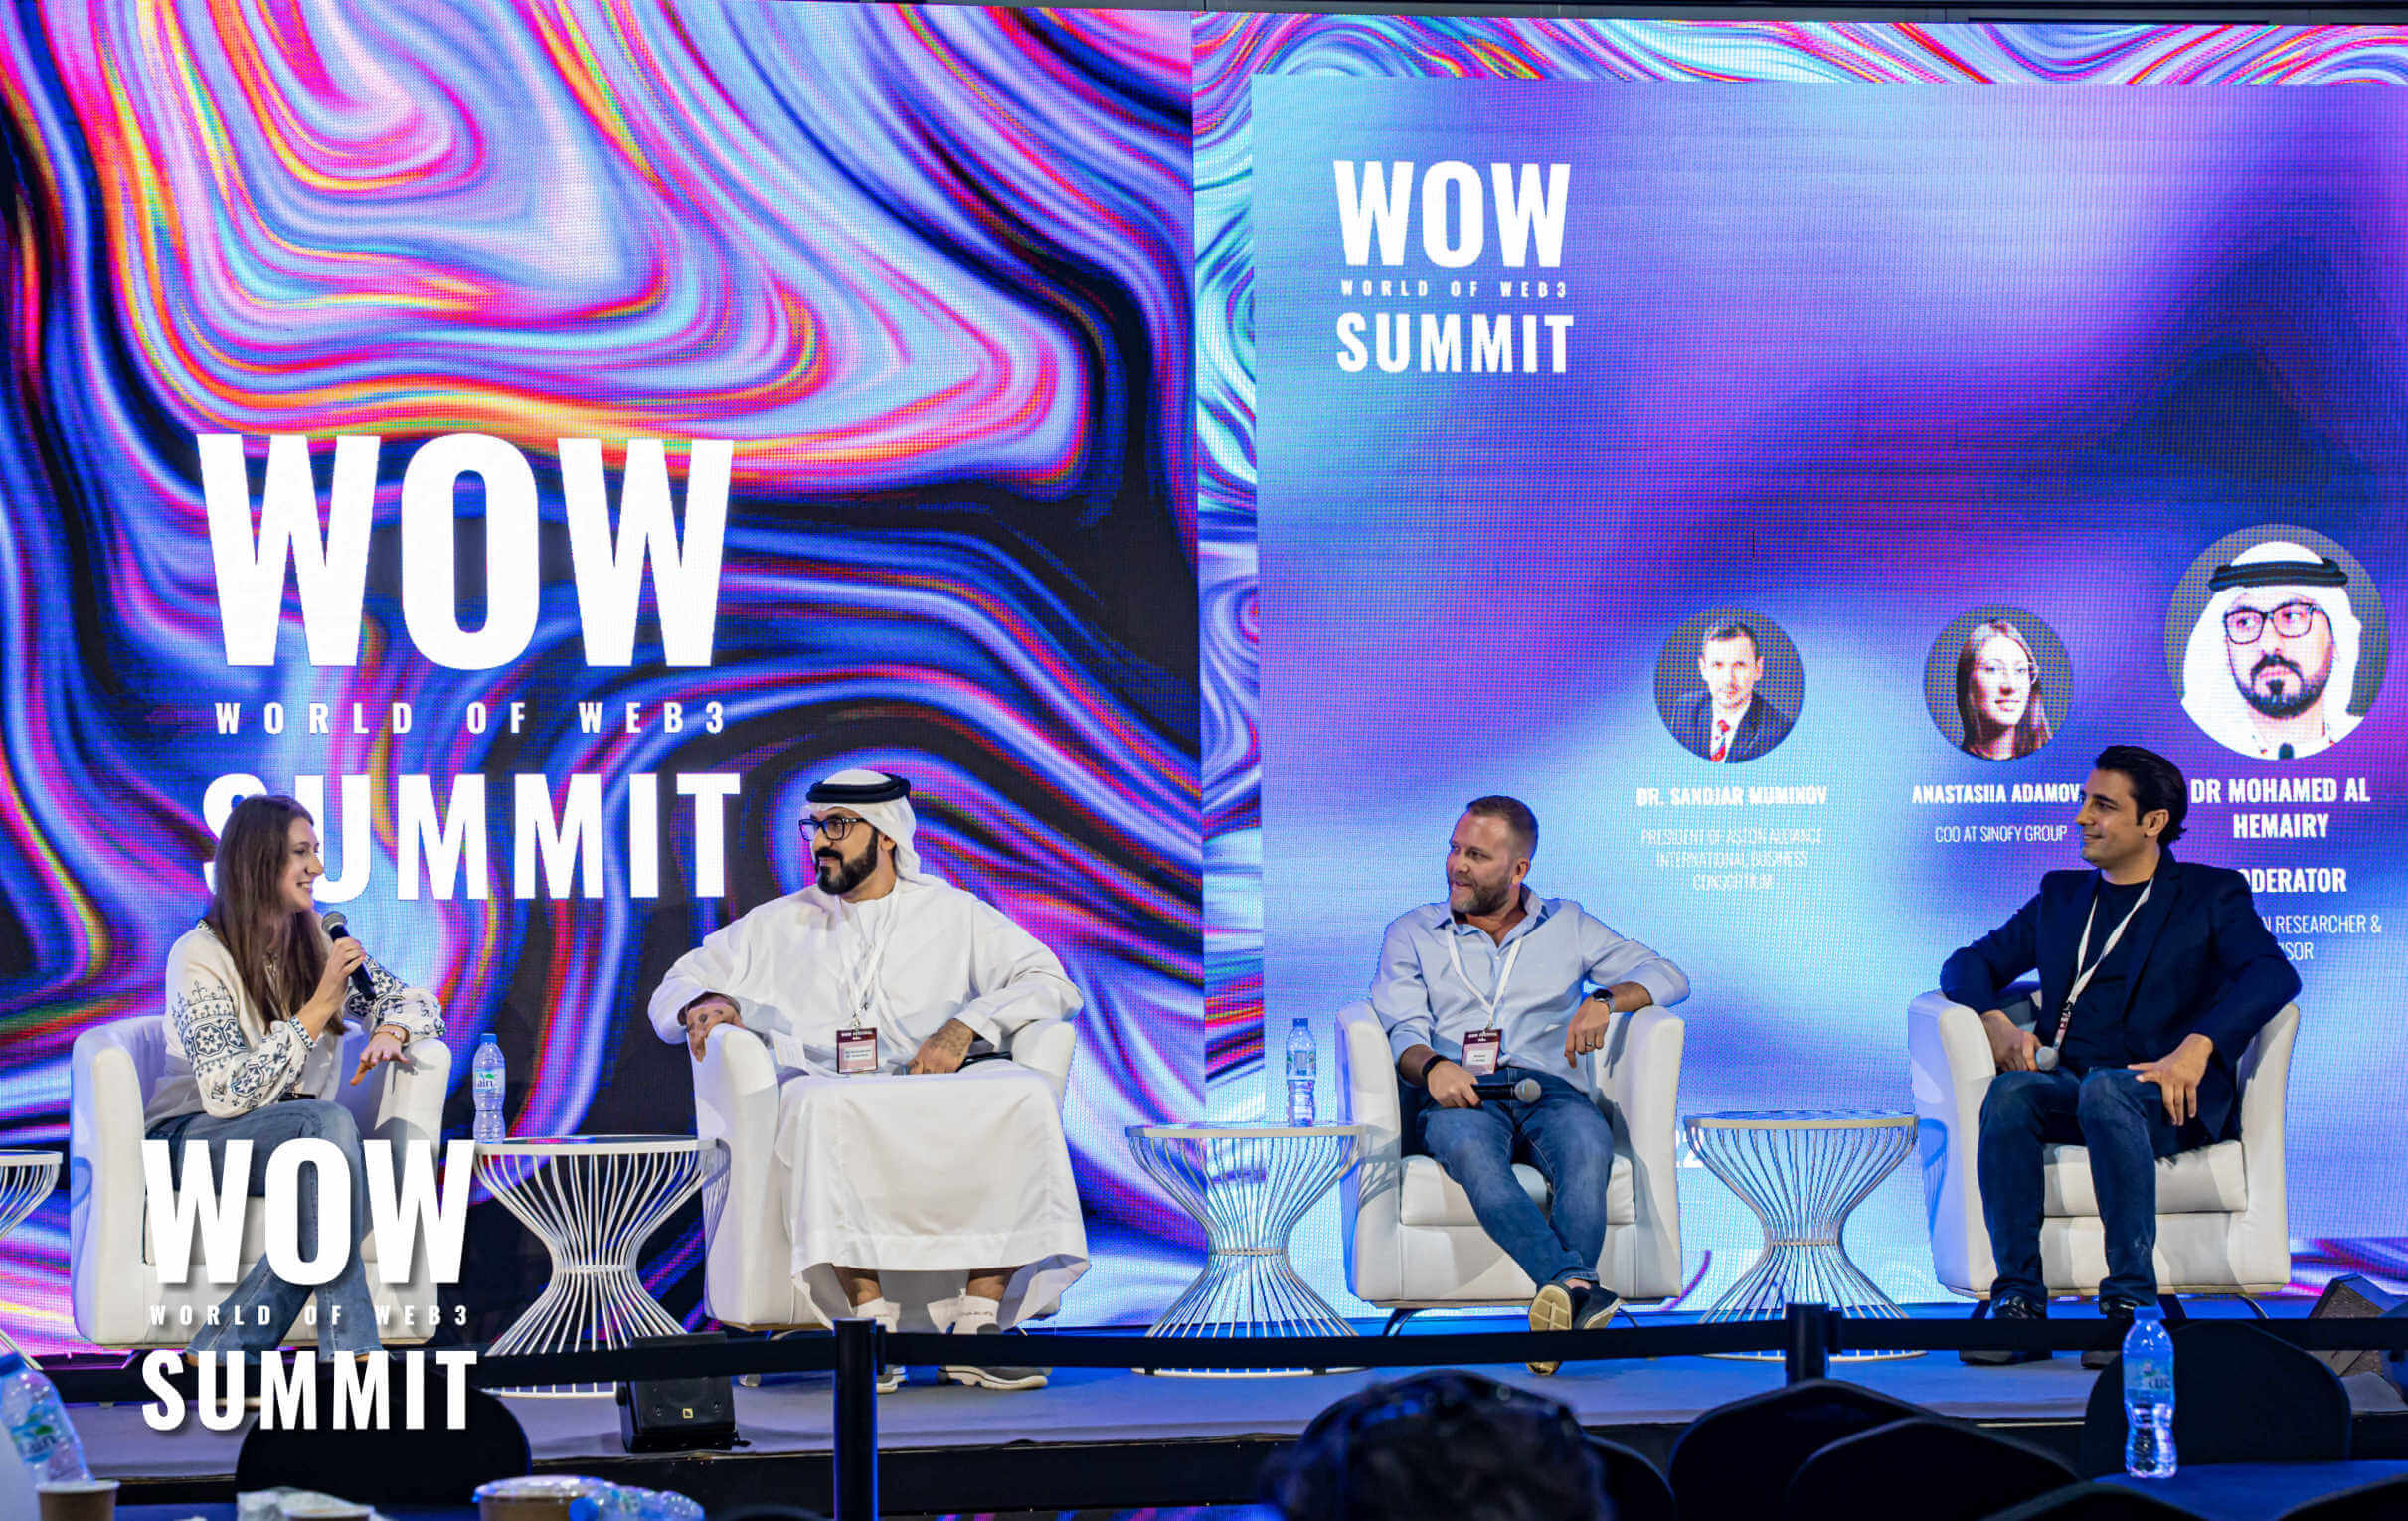 NFT-Workx-Adam-Leese-CEO-Panel-WOW-Summit-2022